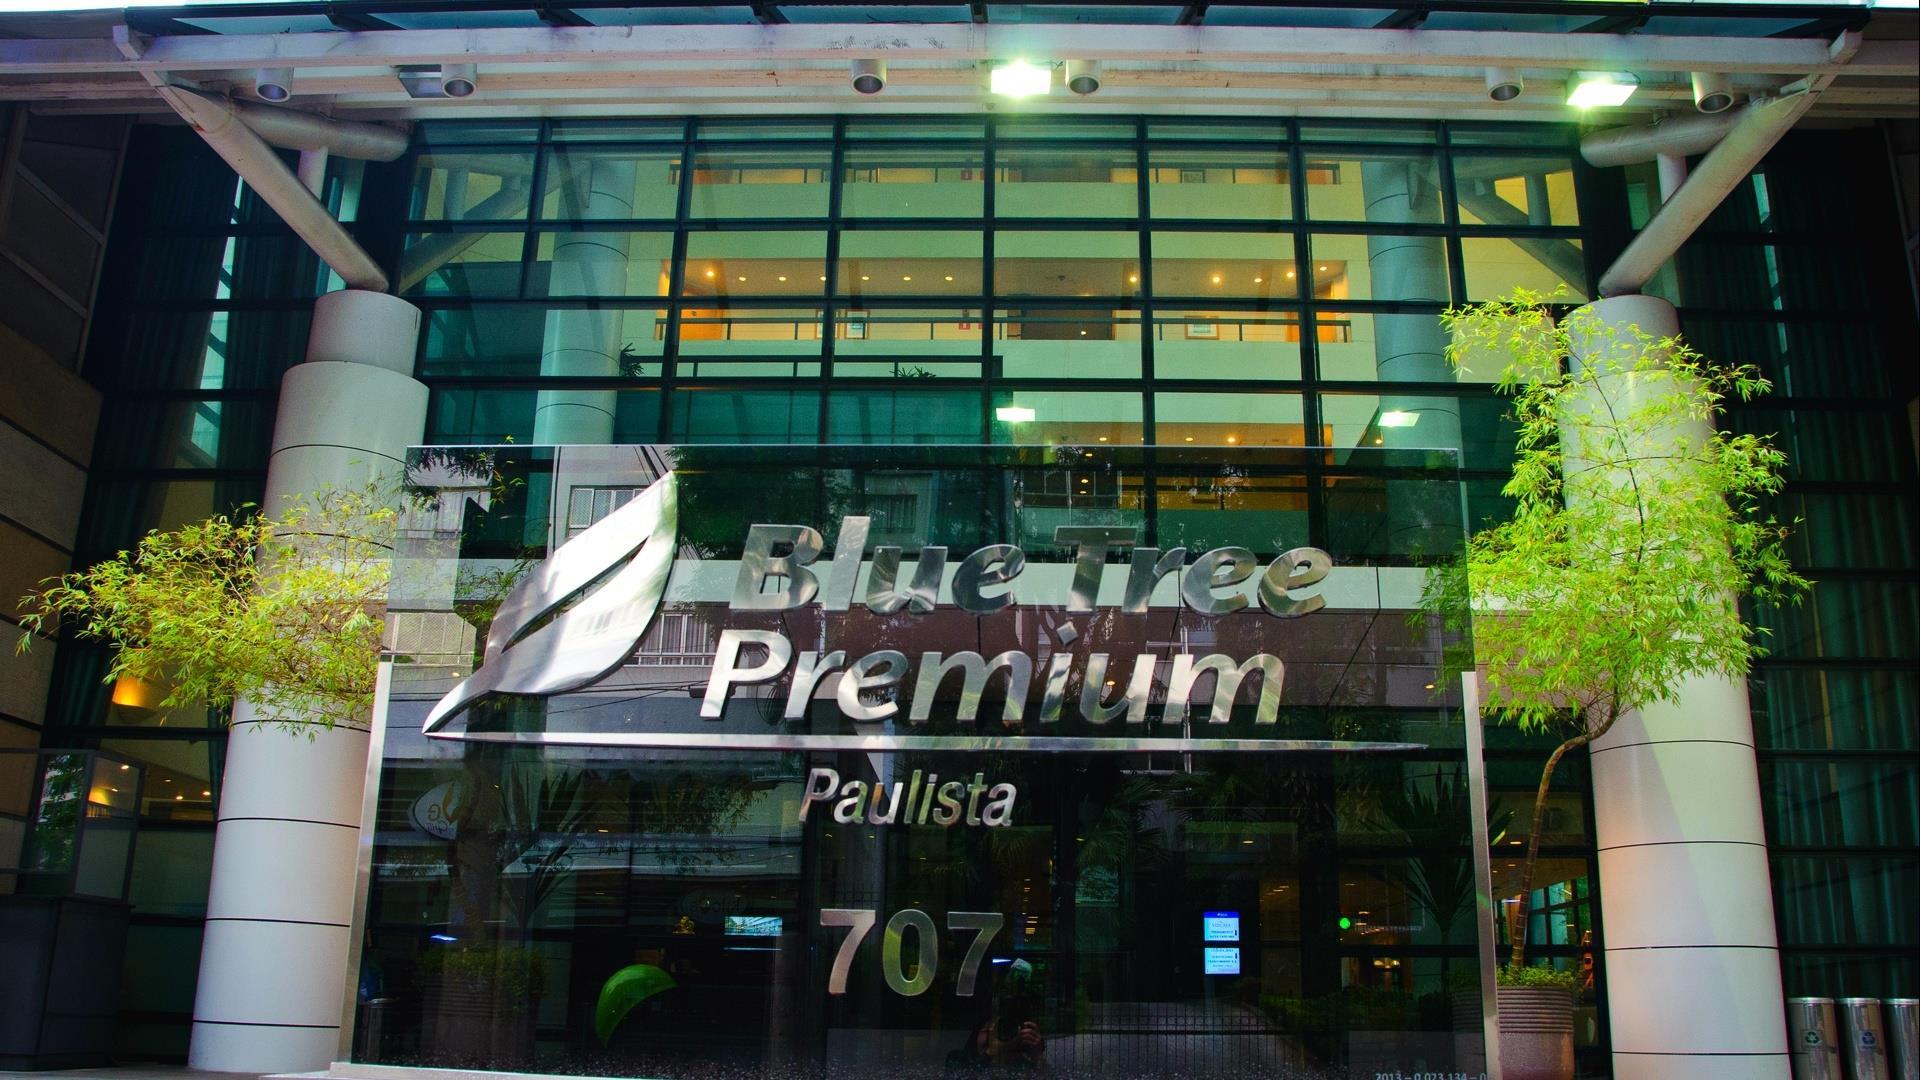 Standard Hotel Blue Tree Premium Paulista in Brazil, Sao Paulo